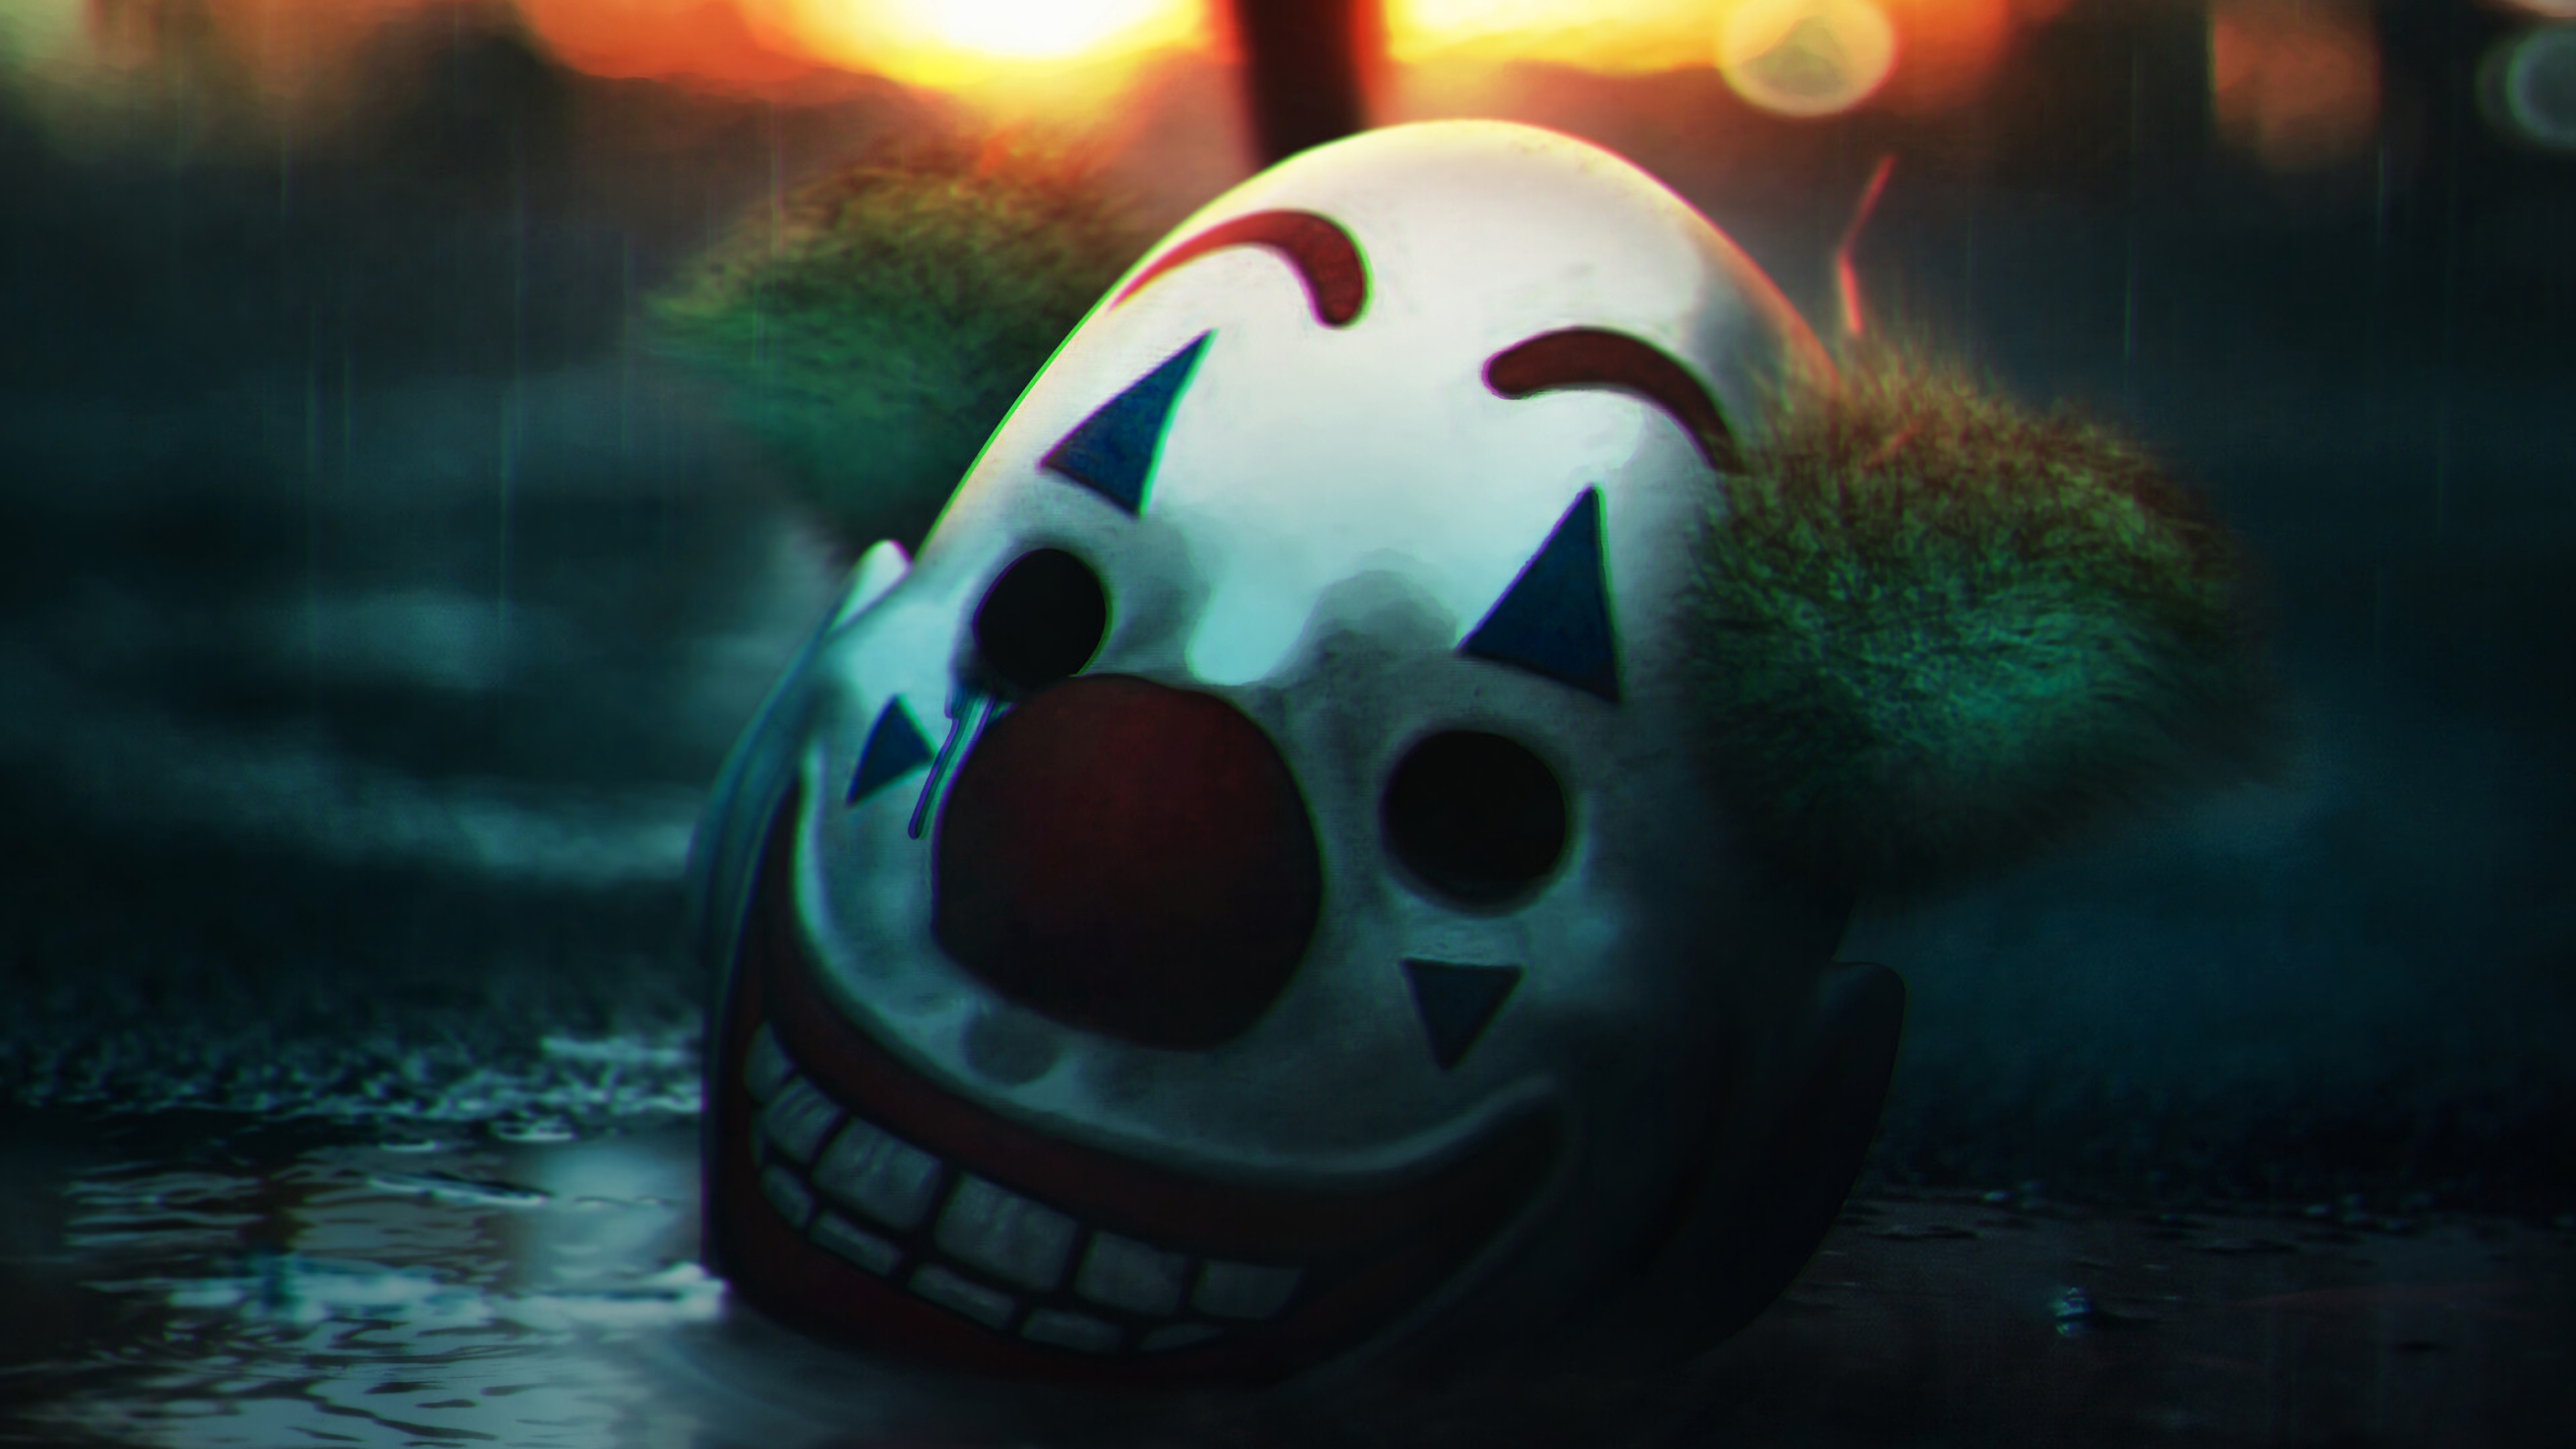 Creepy Joker  Smile  Wallpaper  HD Artist 4K  Wallpapers  